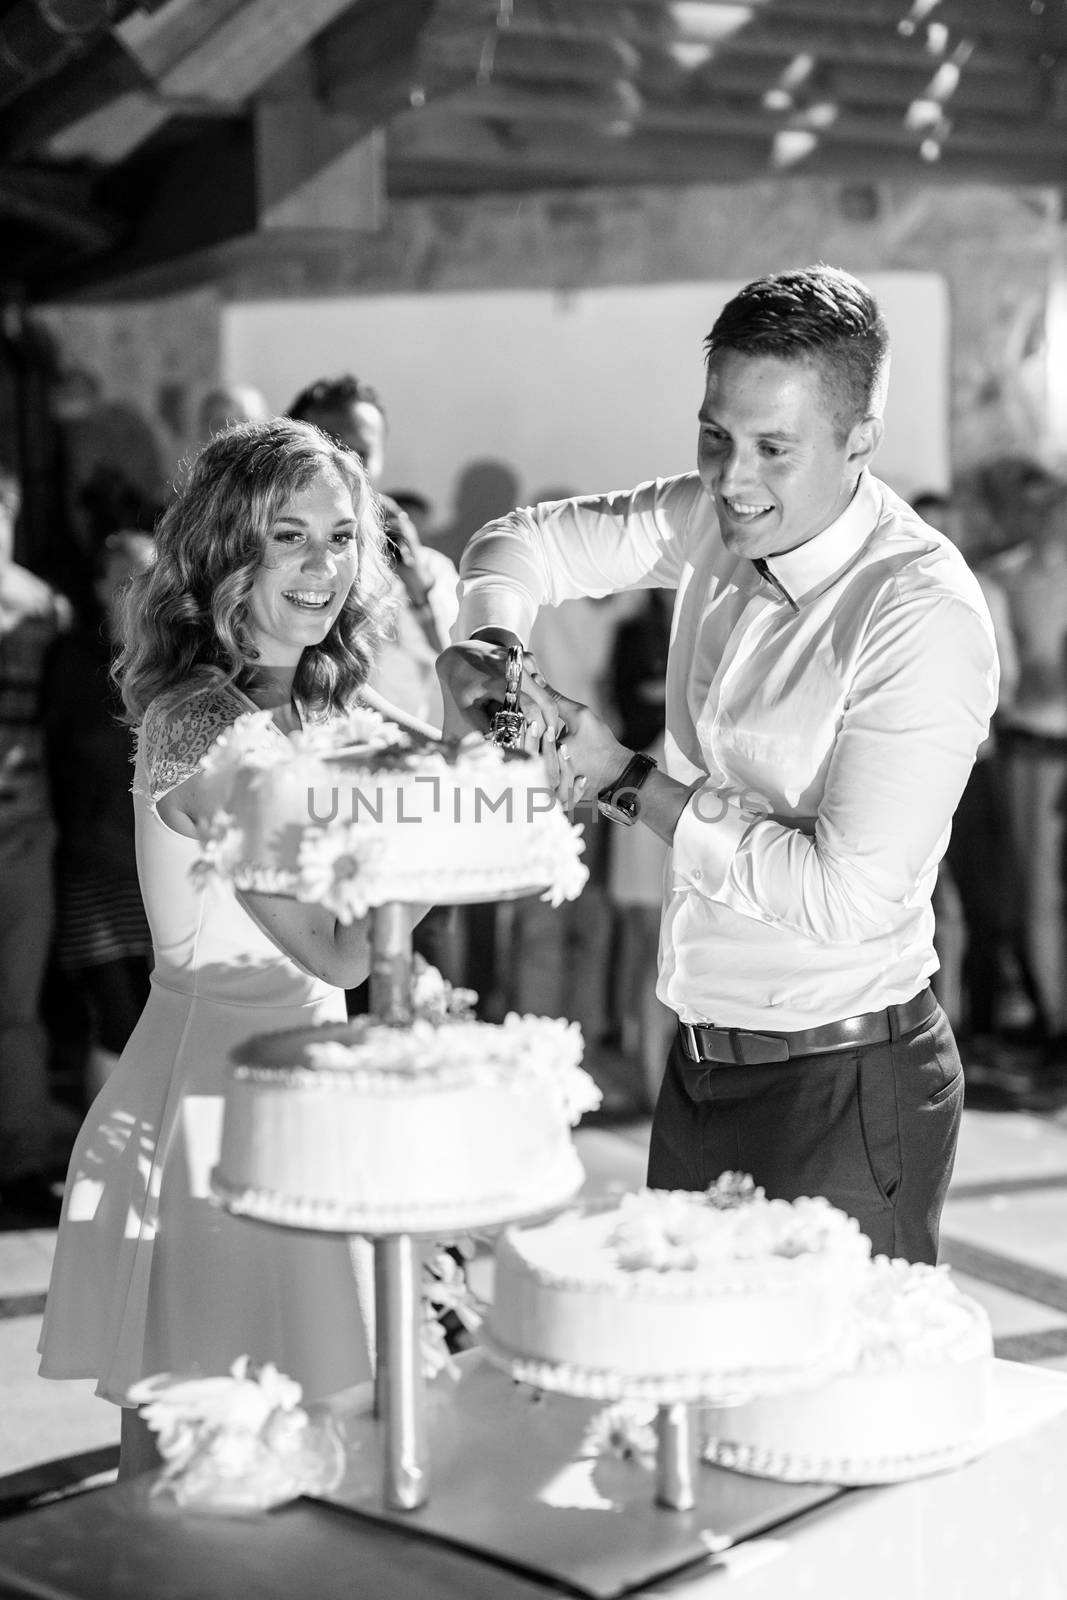 Happy bride and groom cut the wedding cake. Wedding celebration. Black and white image.